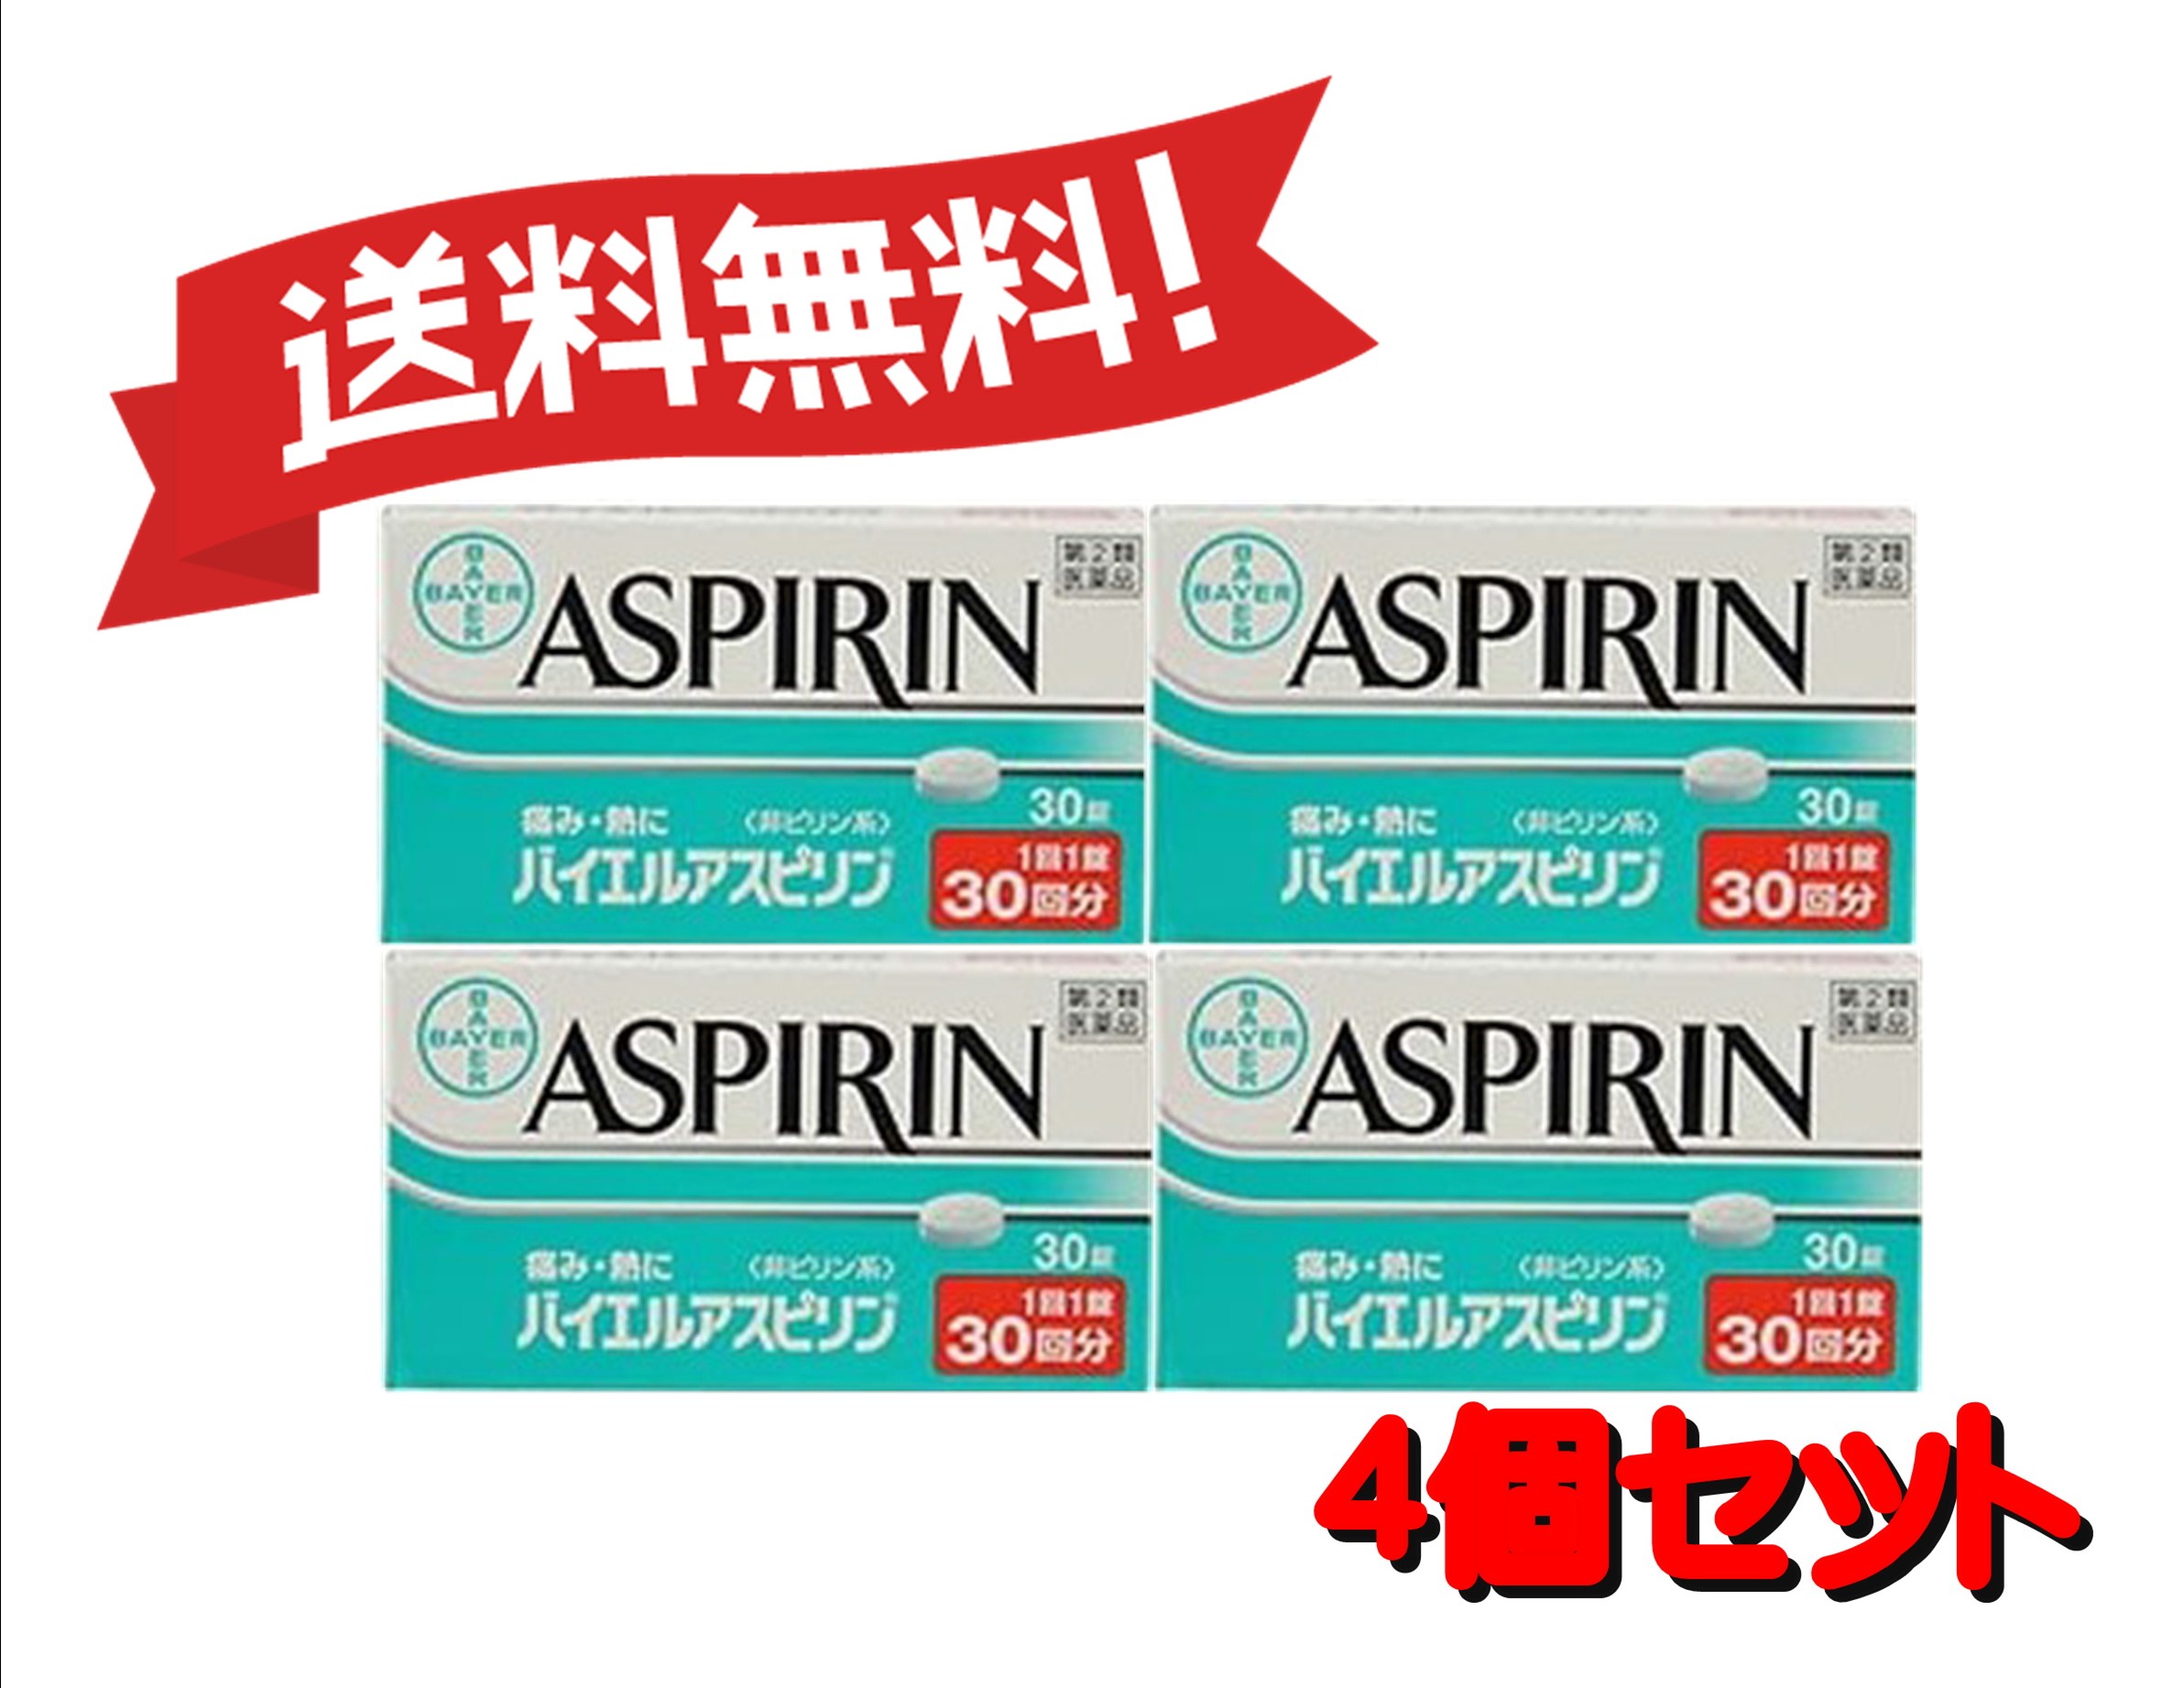 25％OFF 注目のブランド 頭痛 発熱によく効く バイエルアスピリン 30錠 4987316024035-4 g-cans.jp g-cans.jp